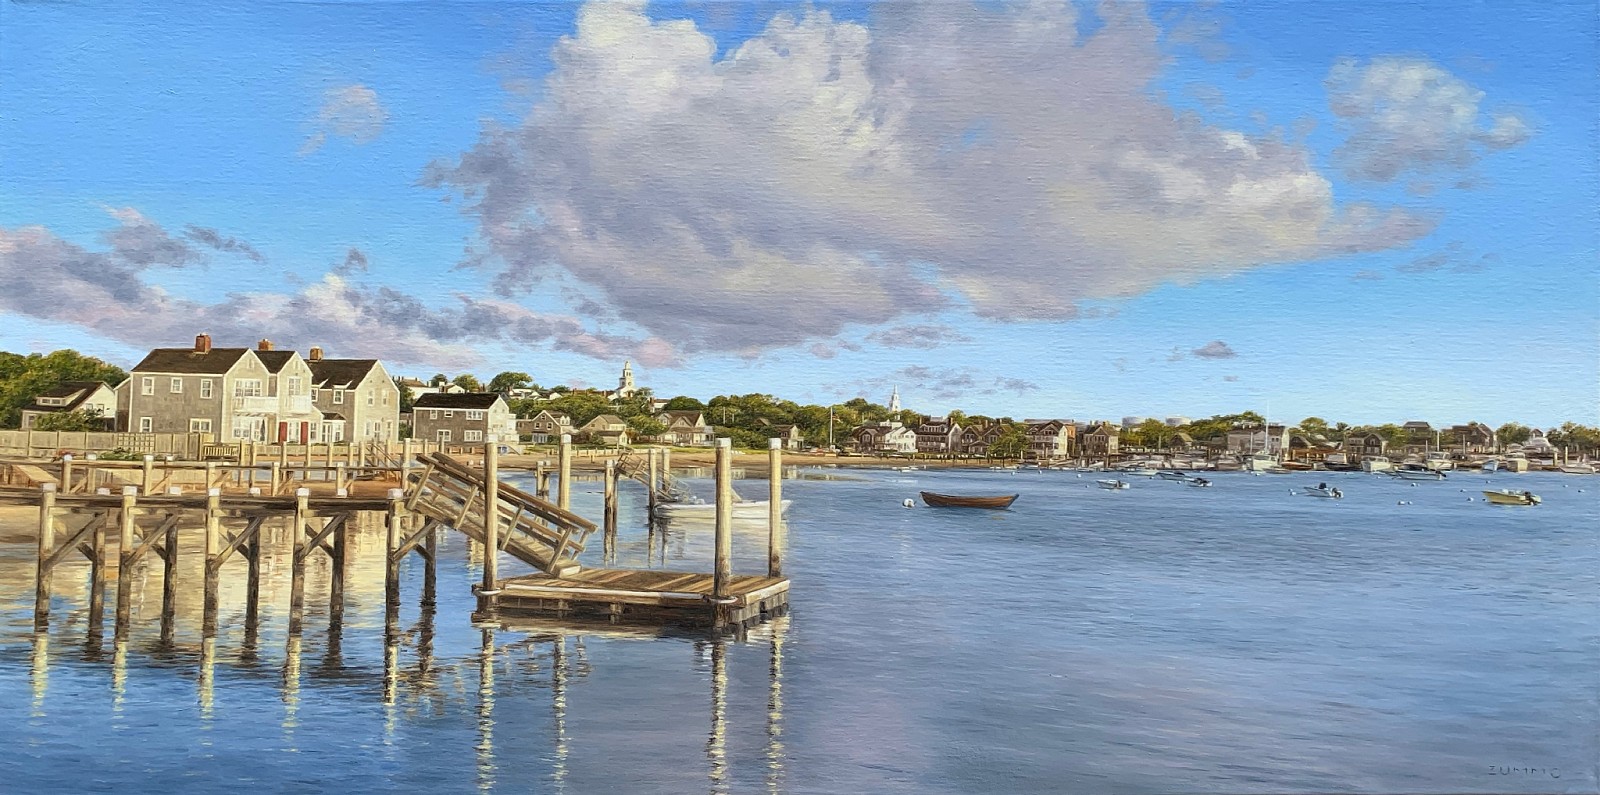 Lori Zummo, Nantucket Harbor Morning, 2019
oil on canvas, 20 x 40 in.
LZ190504